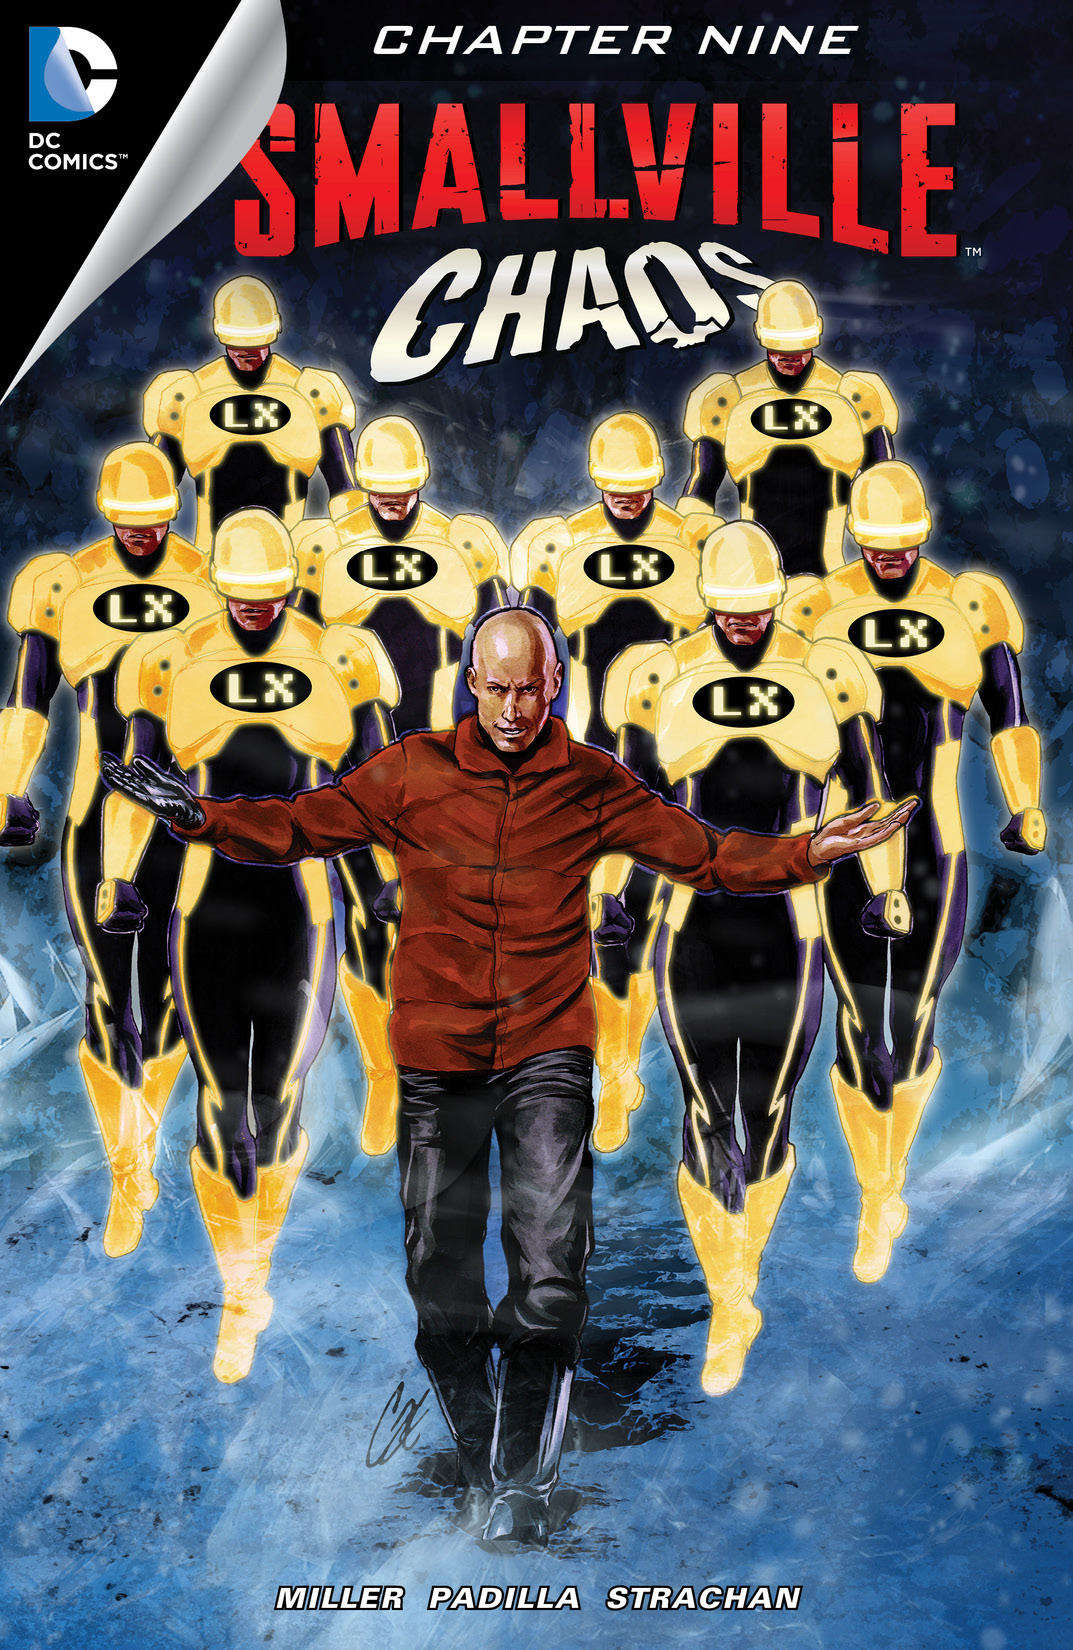 Smallville Season 11: Chaos #9 preview images